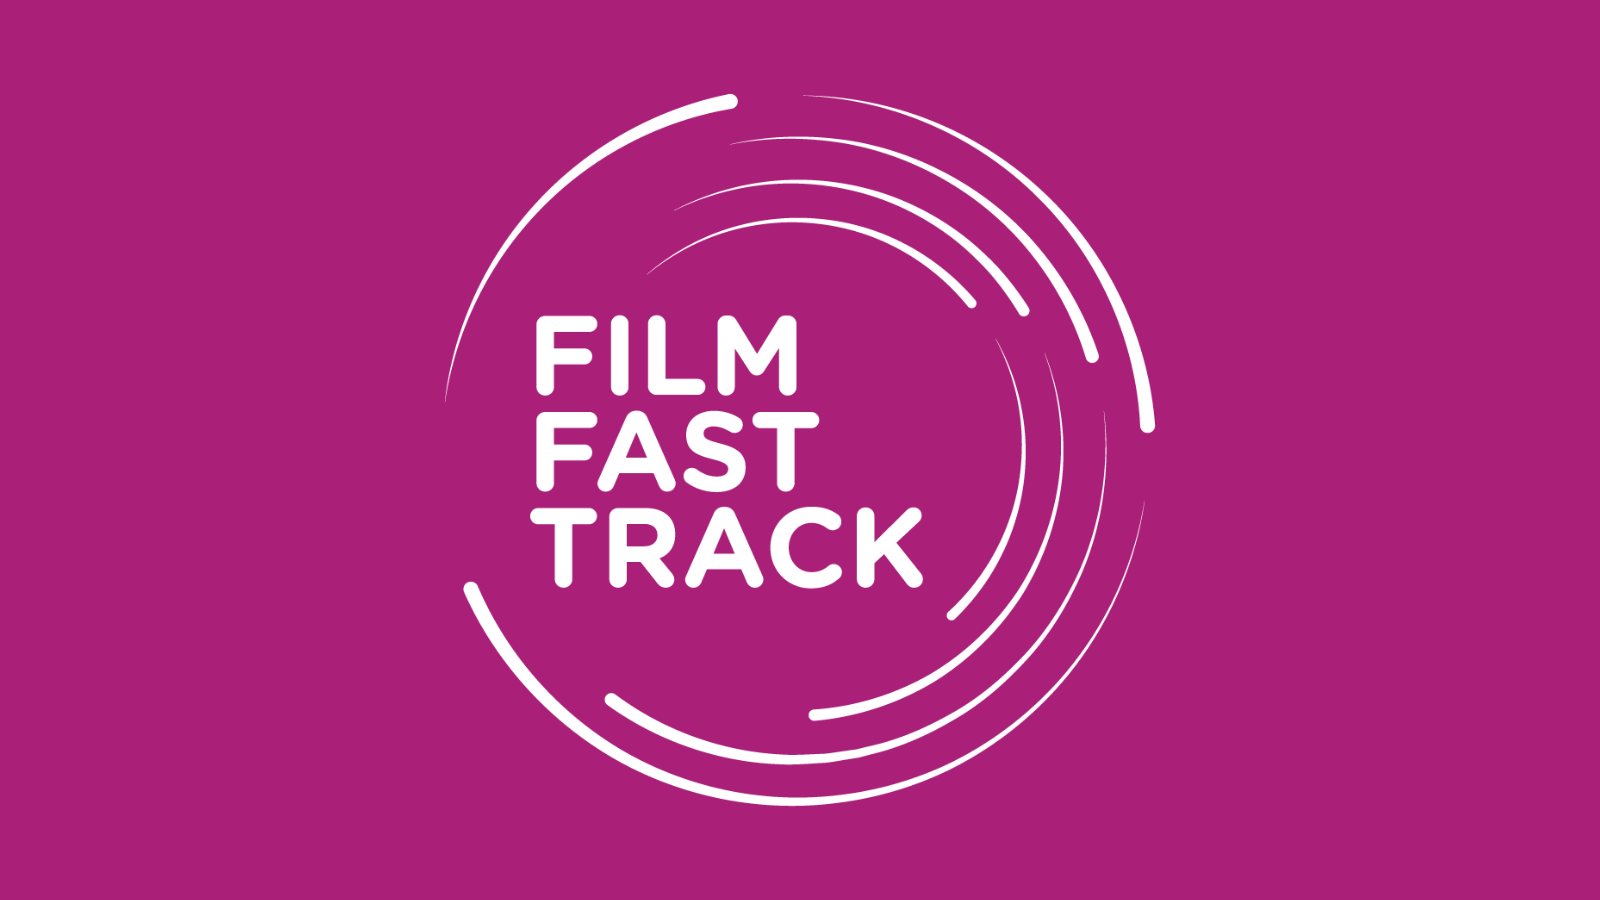 Film Fast Track logo again a purple background